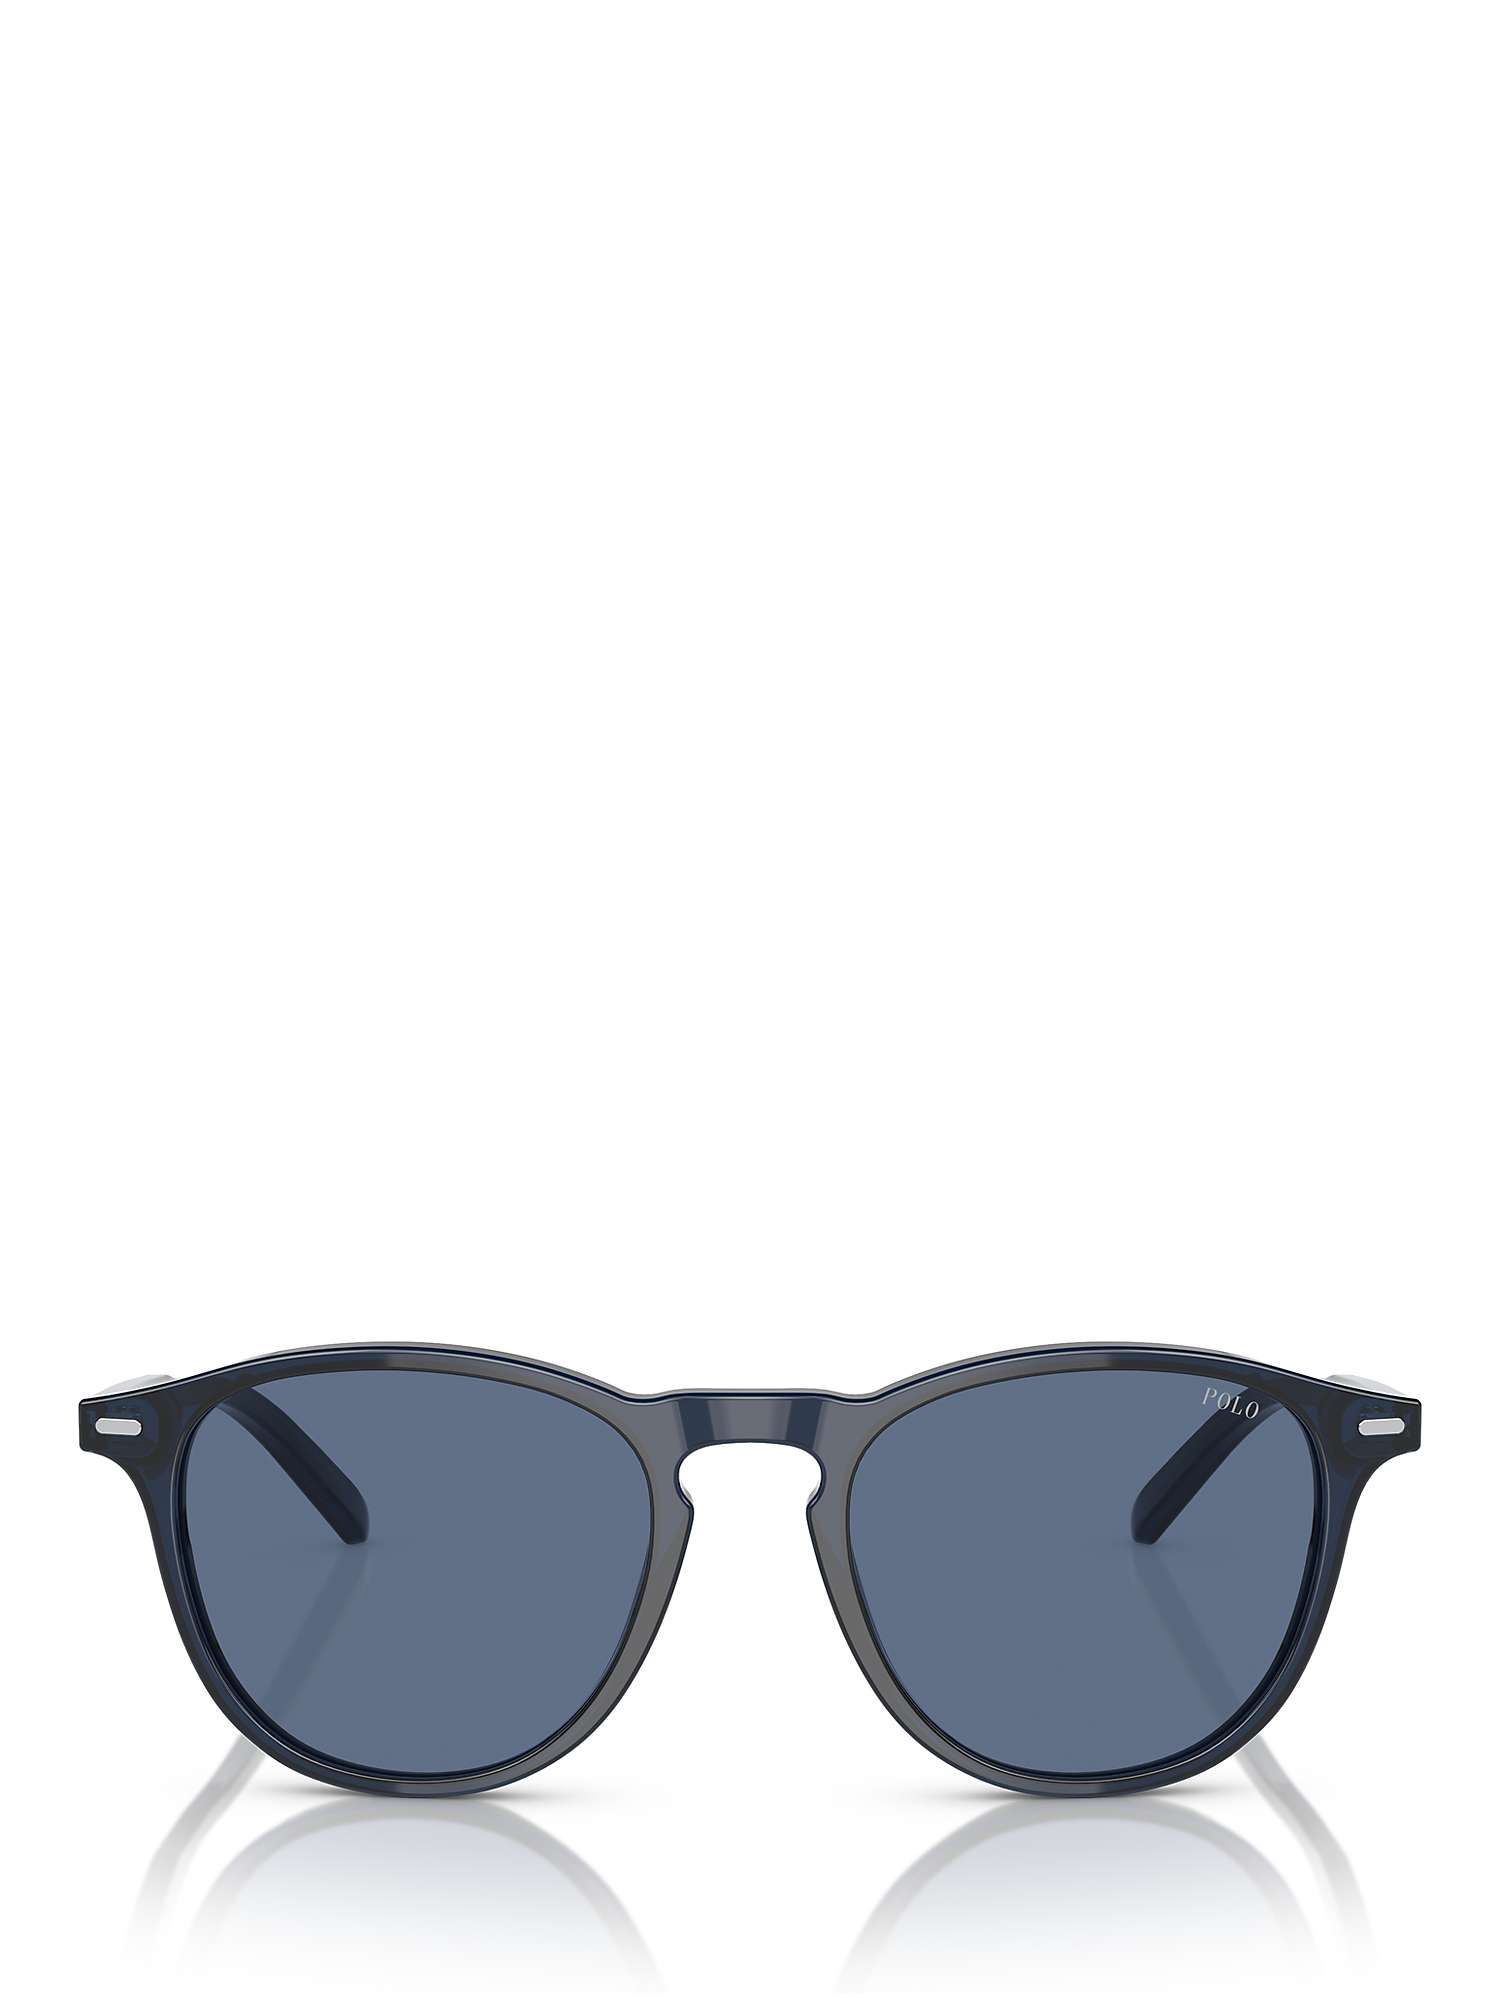 Buy Ralph Lauren PH4181 Men's Phantos Sunglasses Online at johnlewis.com